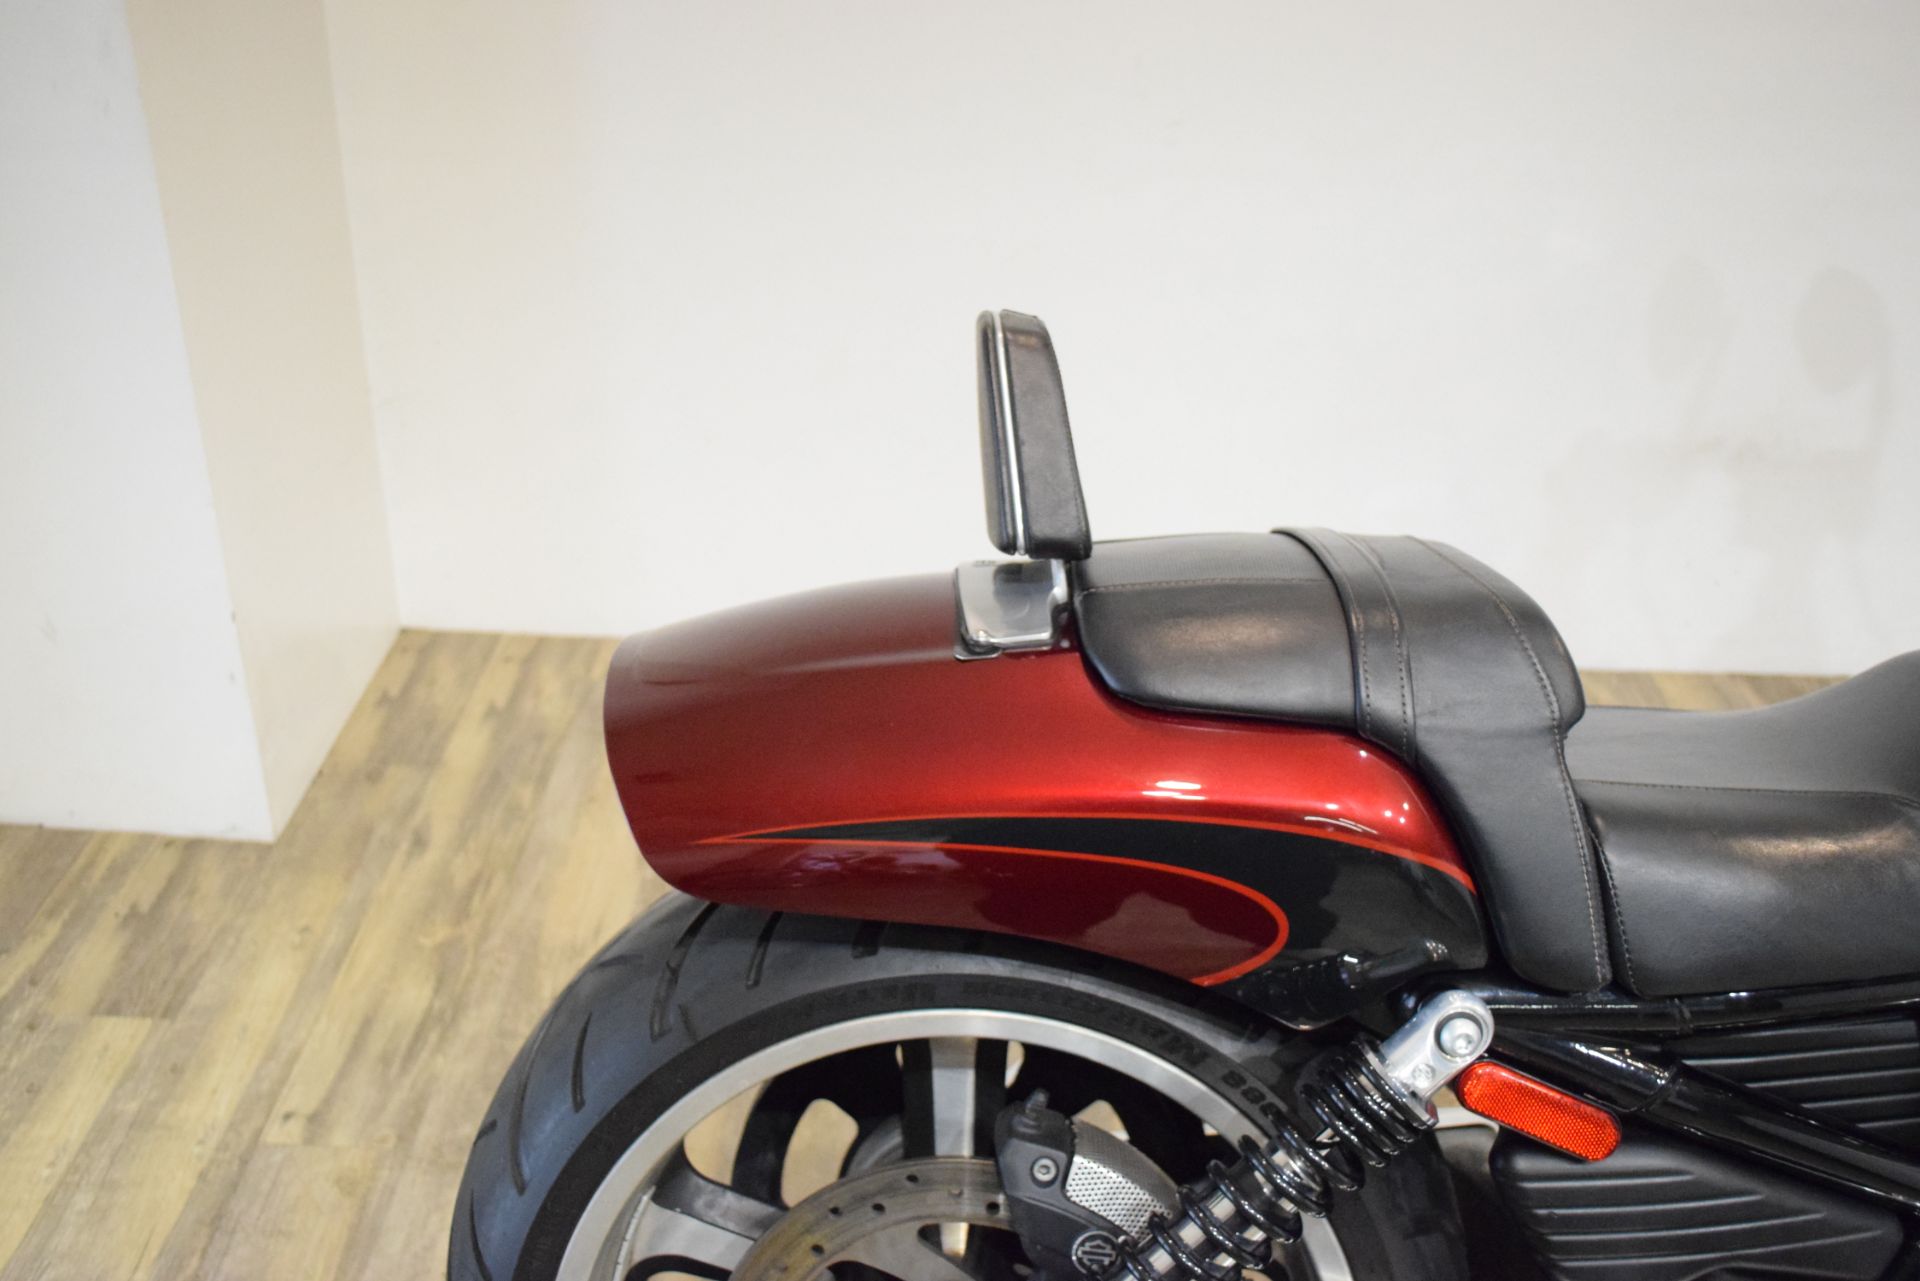 2015 Harley-Davidson V-Rod Muscle® in Wauconda, Illinois - Photo 7